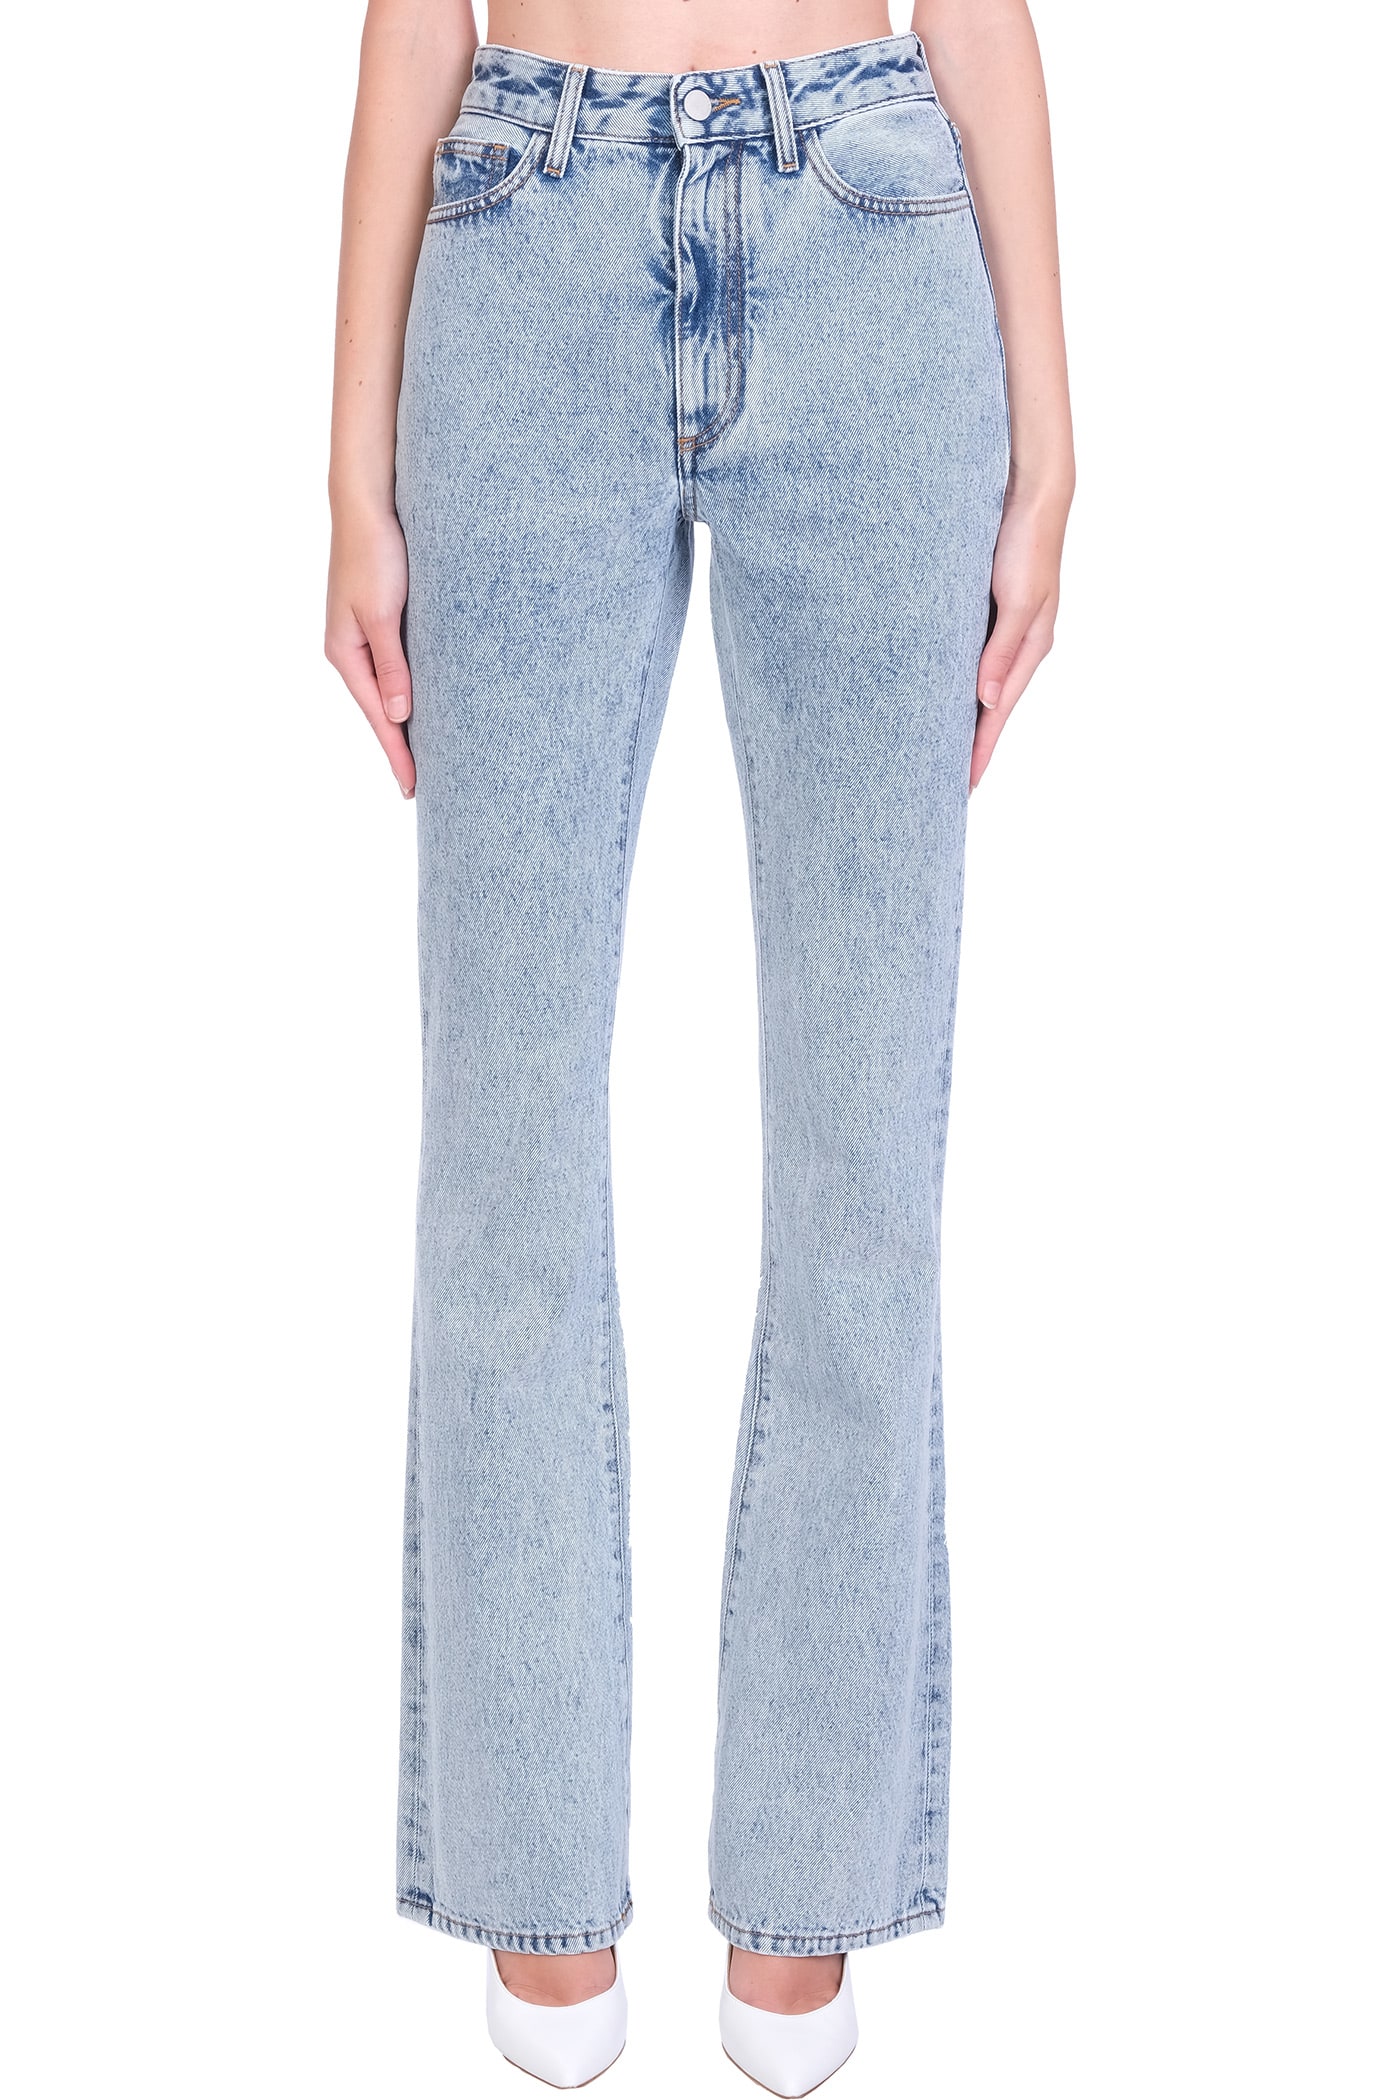 Alessandra Rich Jeans In Blue Denim